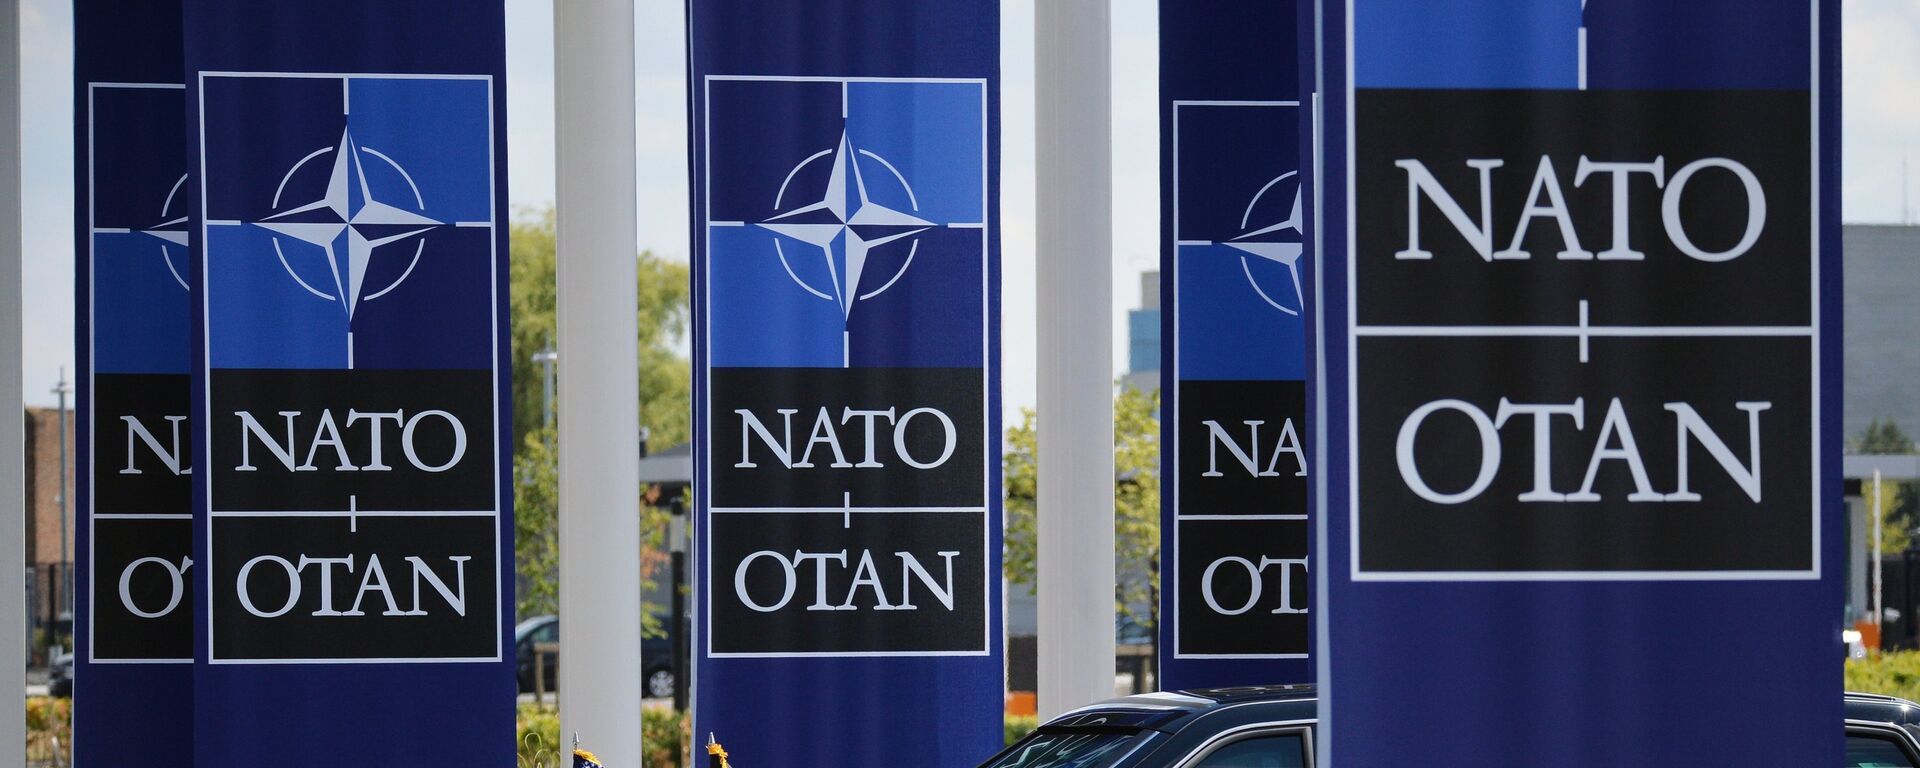 Автомобиль президента США Дональда Трампа на саммите НАТО - Sputnik Казахстан, 1920, 18.05.2022